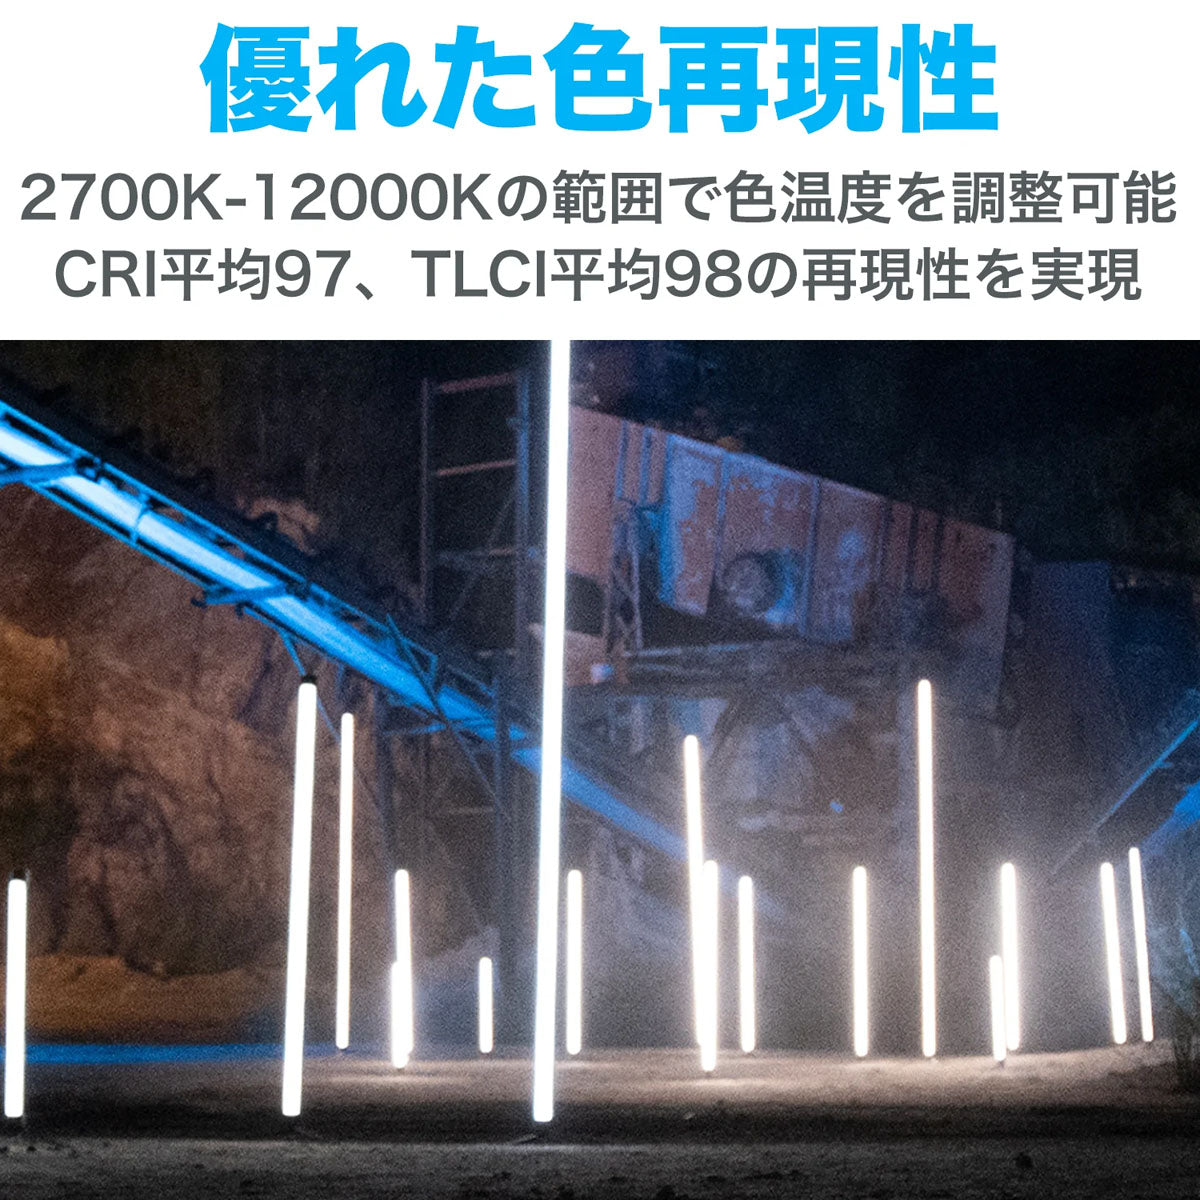 NANLITE(ナンライト) LEDライト Pavotube II 30X 2キット (15-2020-2Kit)